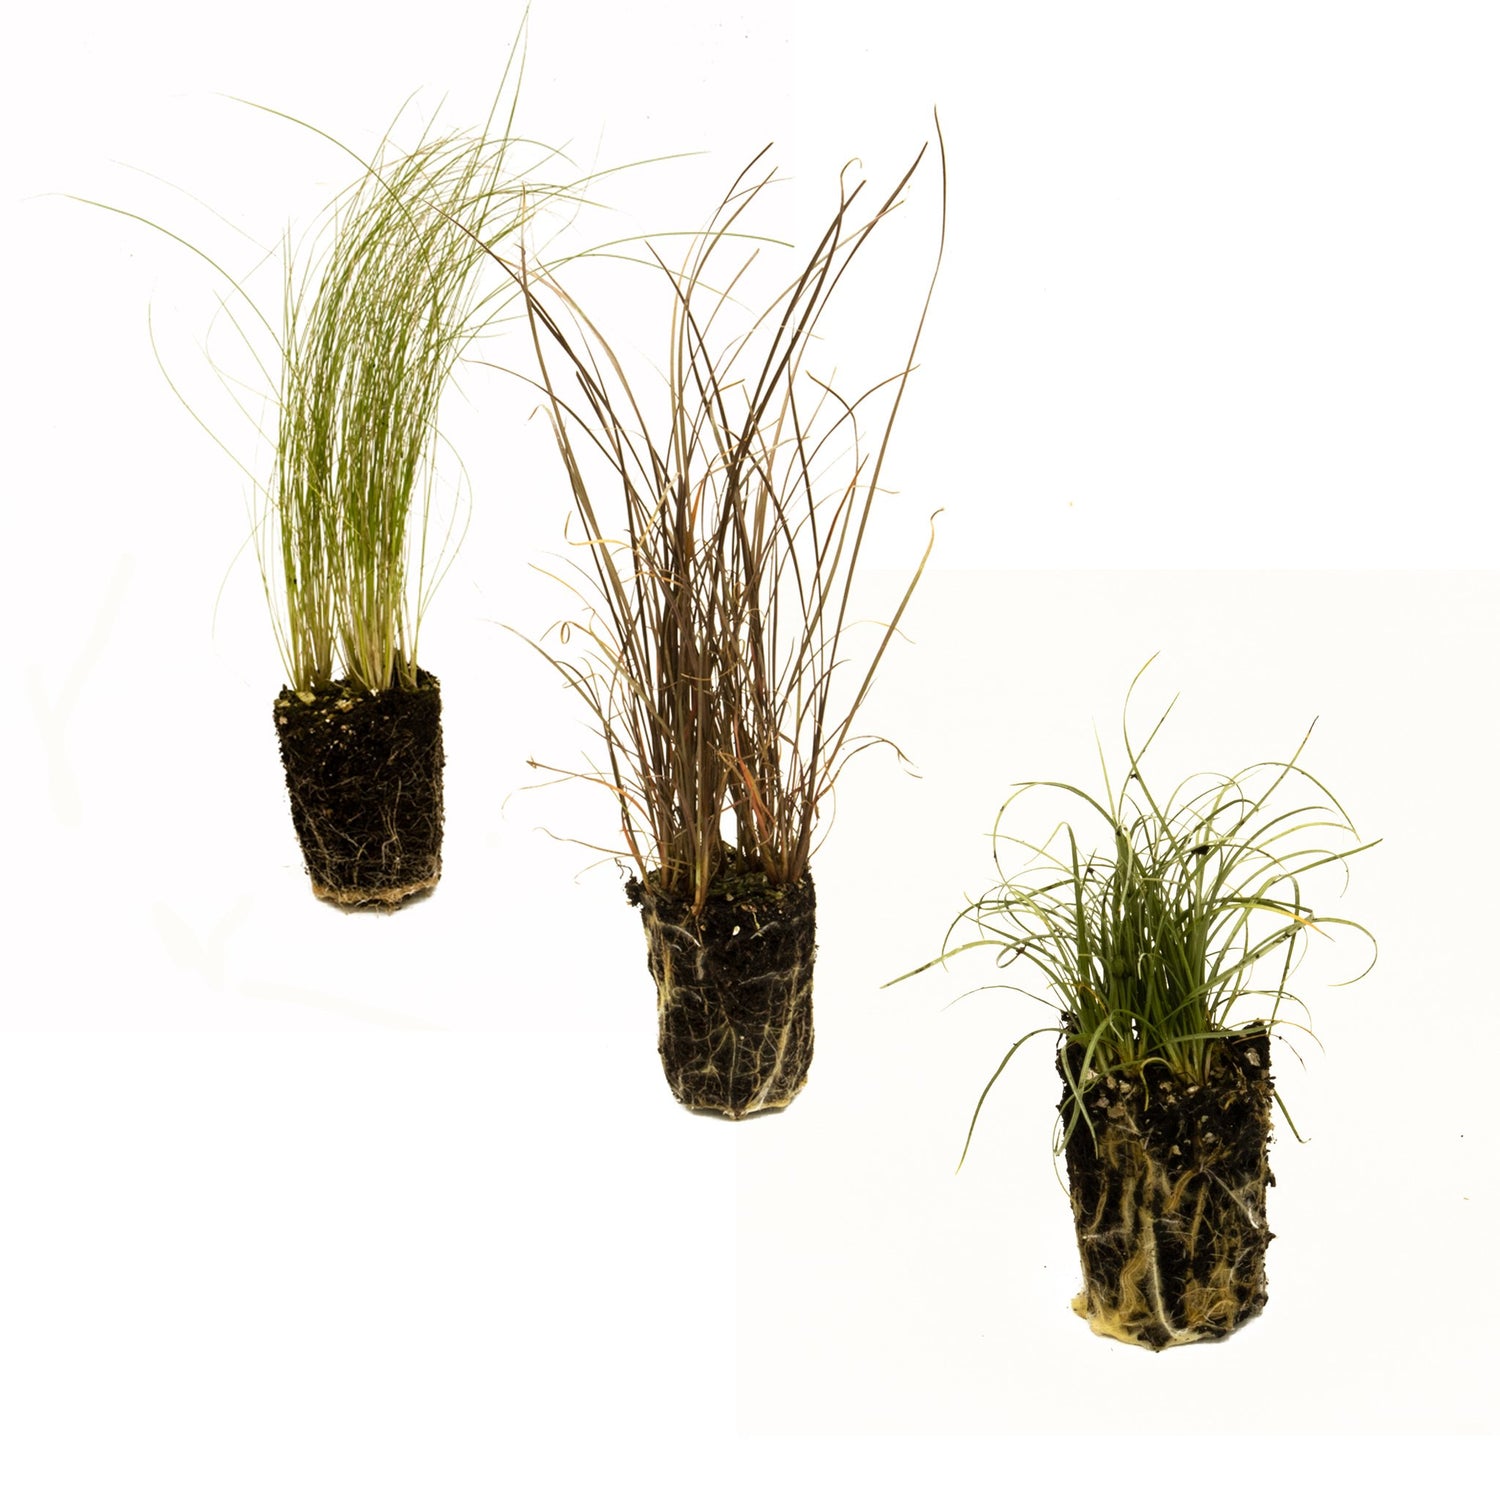 Collection of grass plug plants